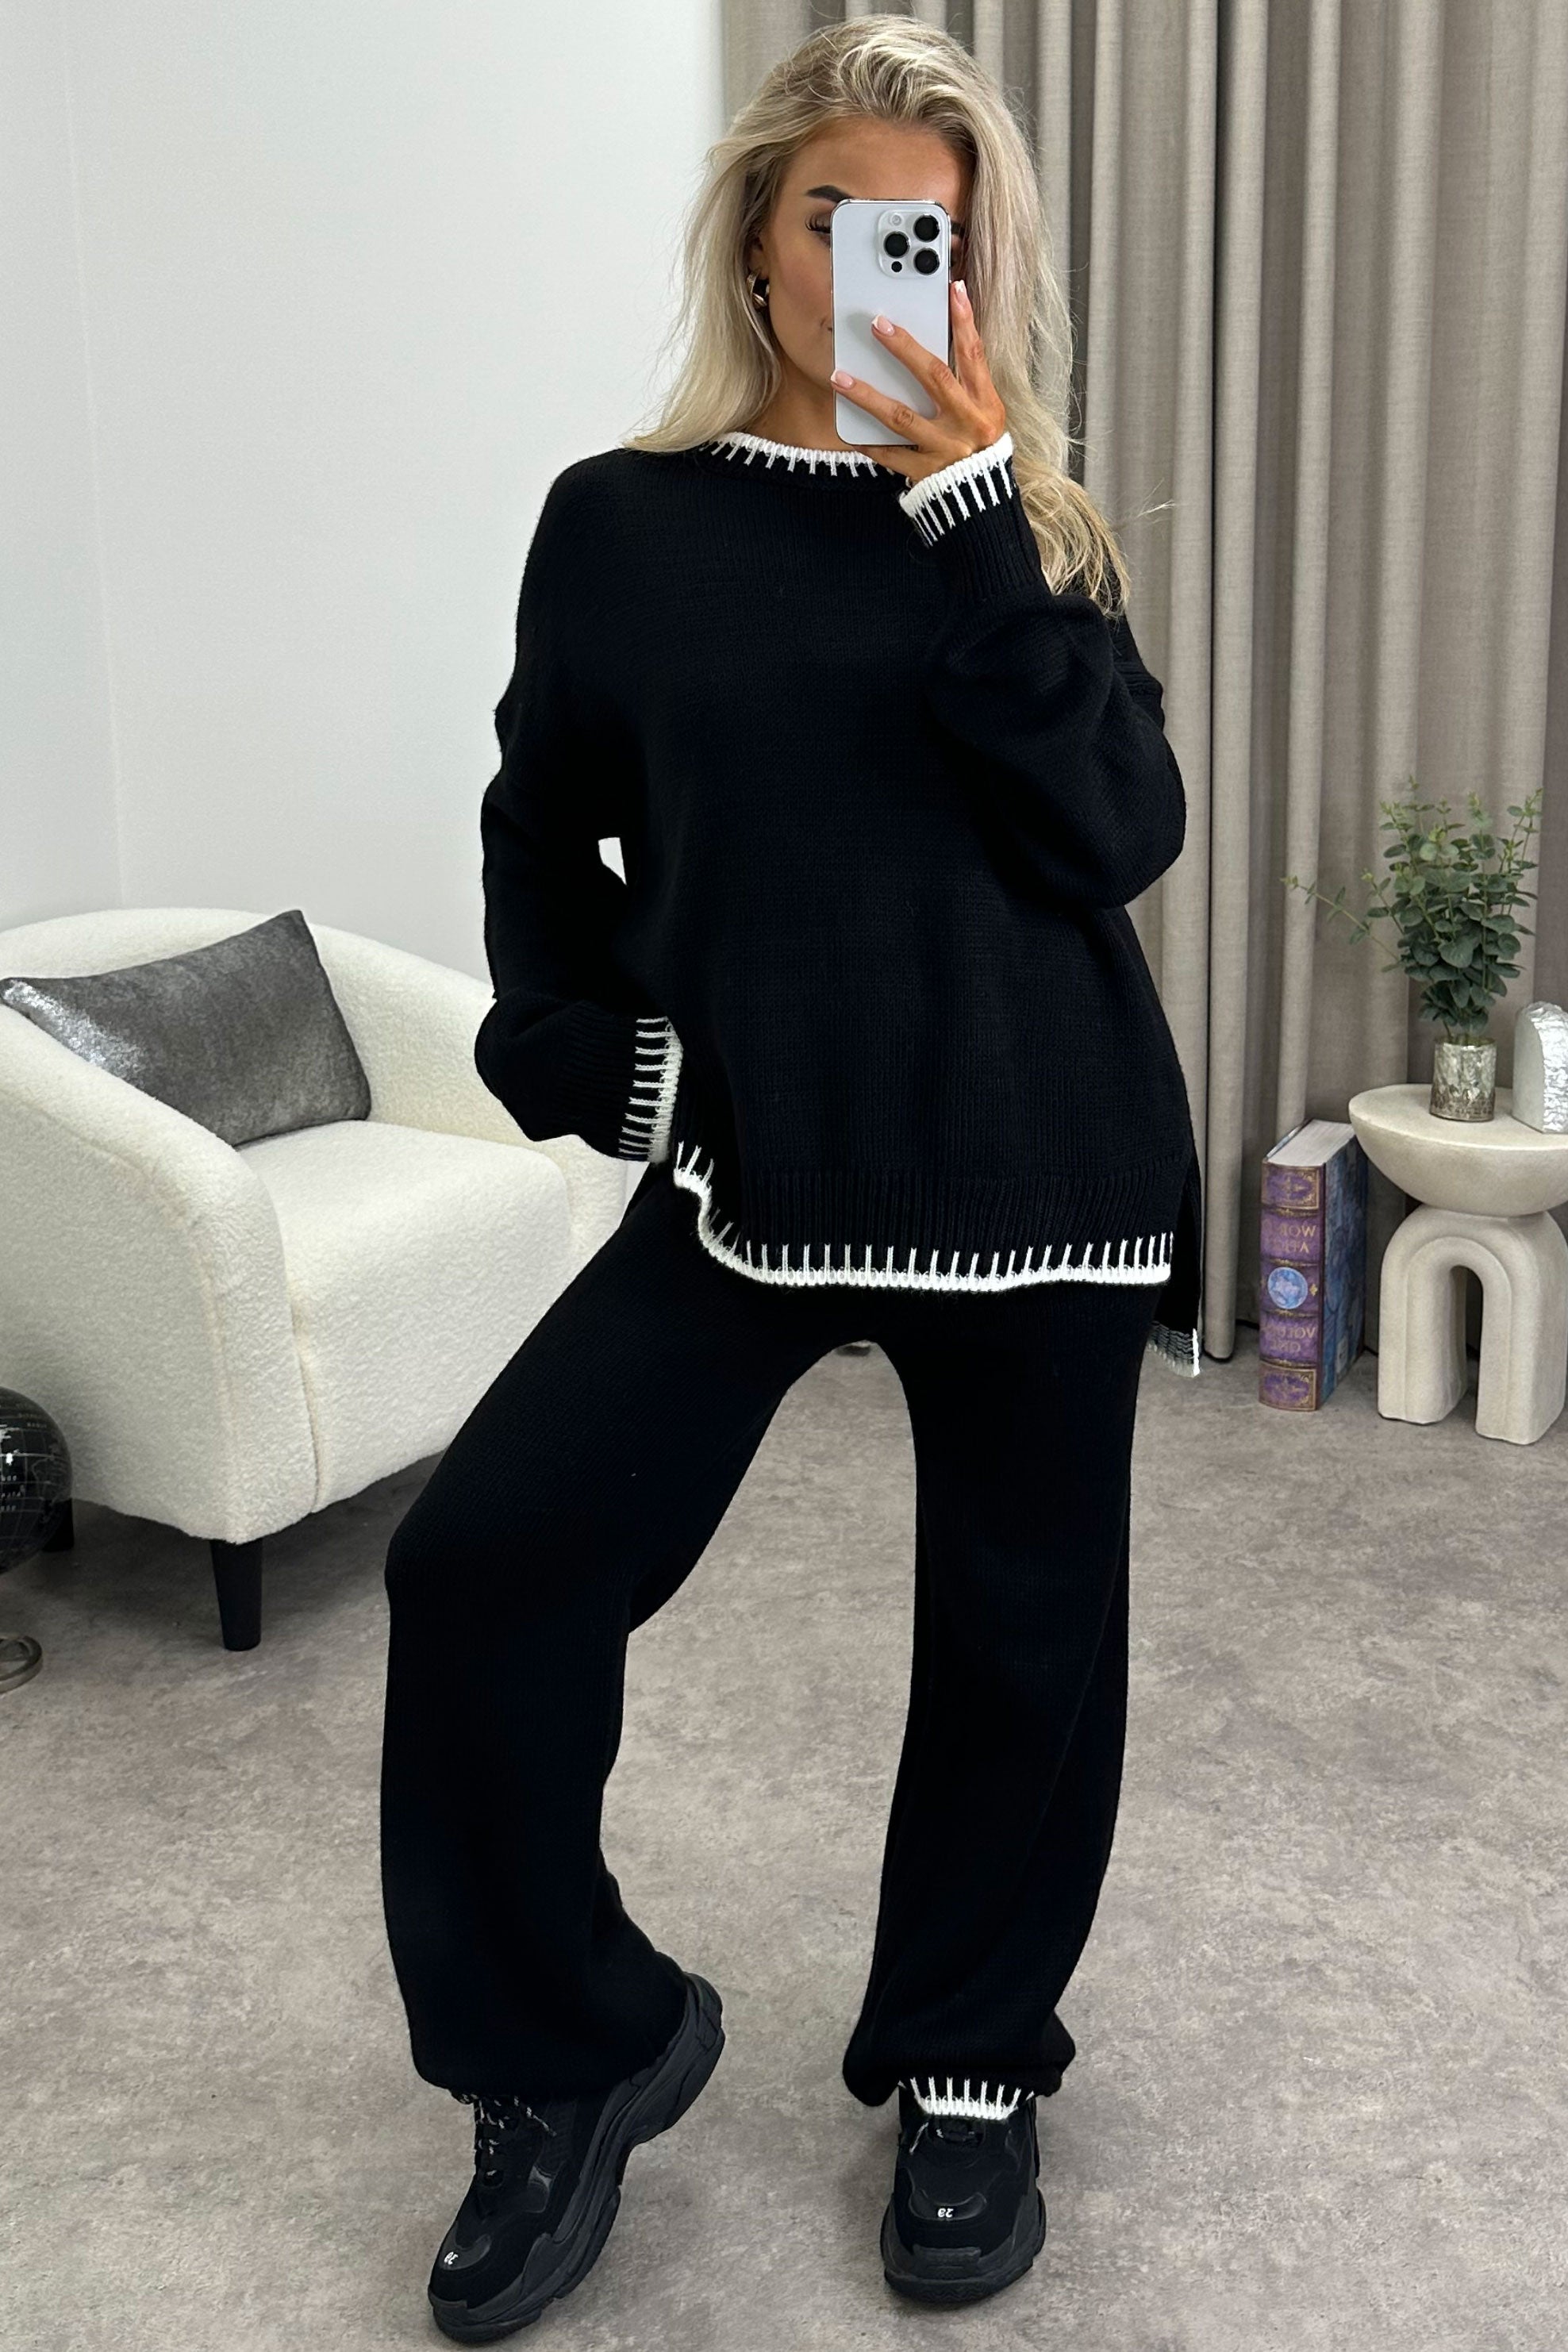 Beige Jumper & Trousers Knitted Loungewear Trim Two Piece Co-ord Set –